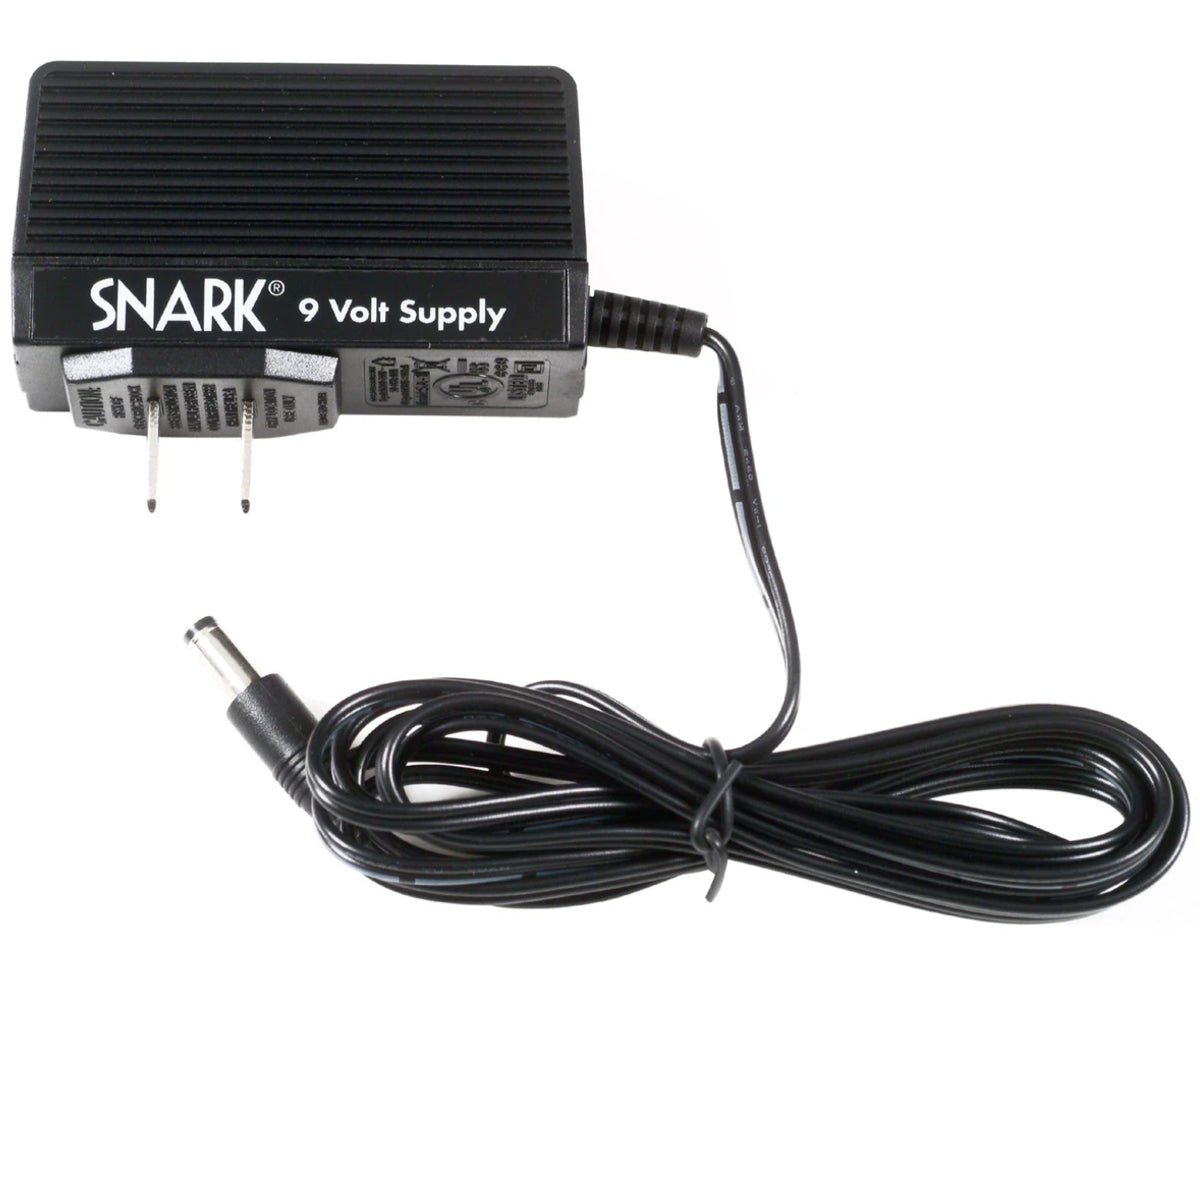 Snark SA-1 Slim 9V DC Adapter - Power Supply